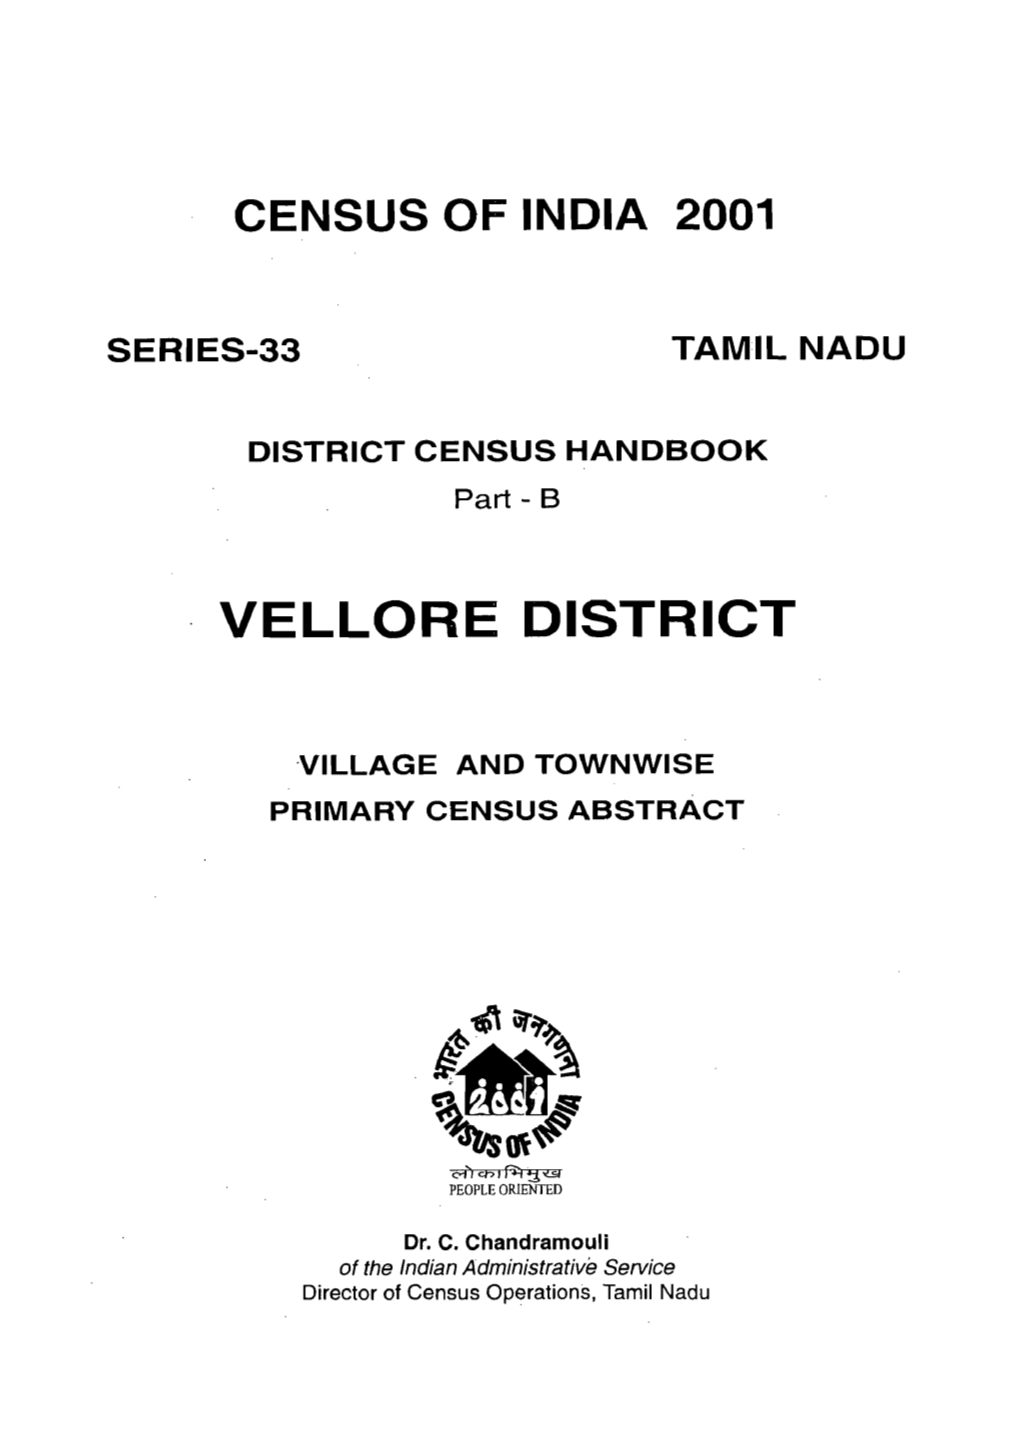 District Census Handbook, Vellore, Part-XII-B, Series-33